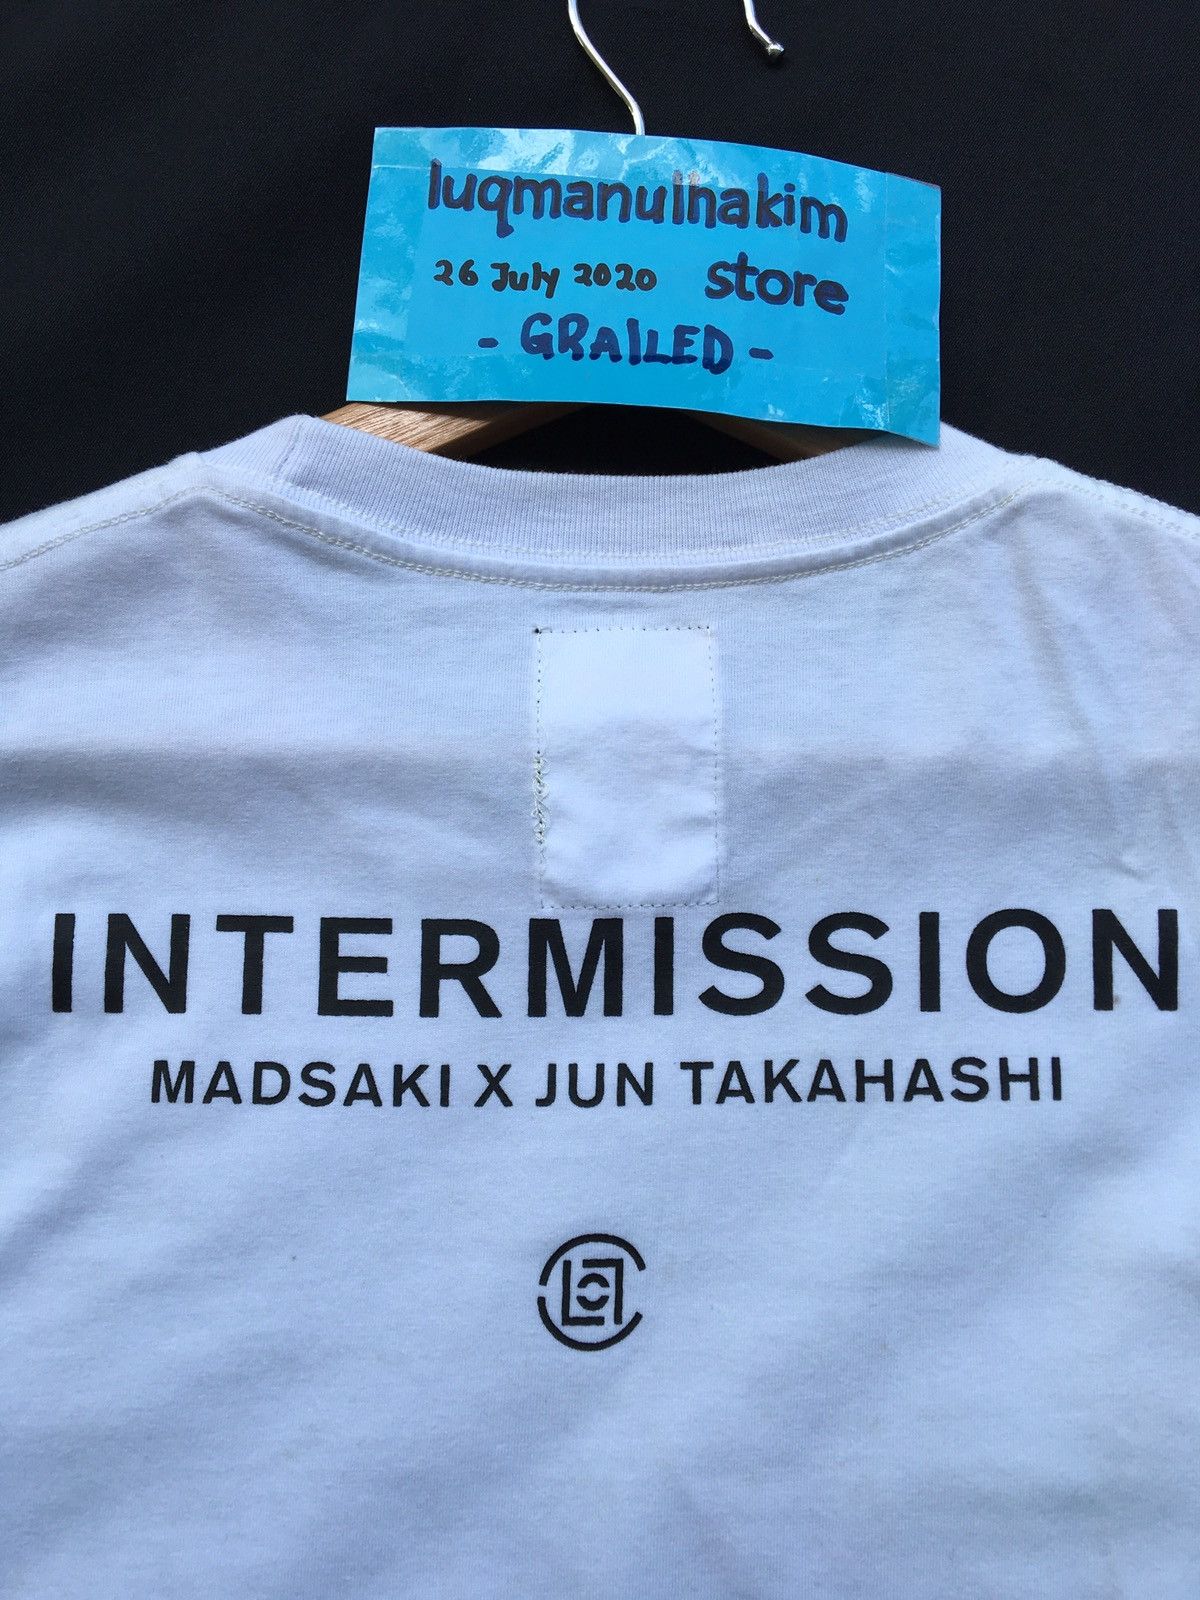 Jun Takahashi Rare Jun Takahashi x Madsaki Intermission Tee | Grailed